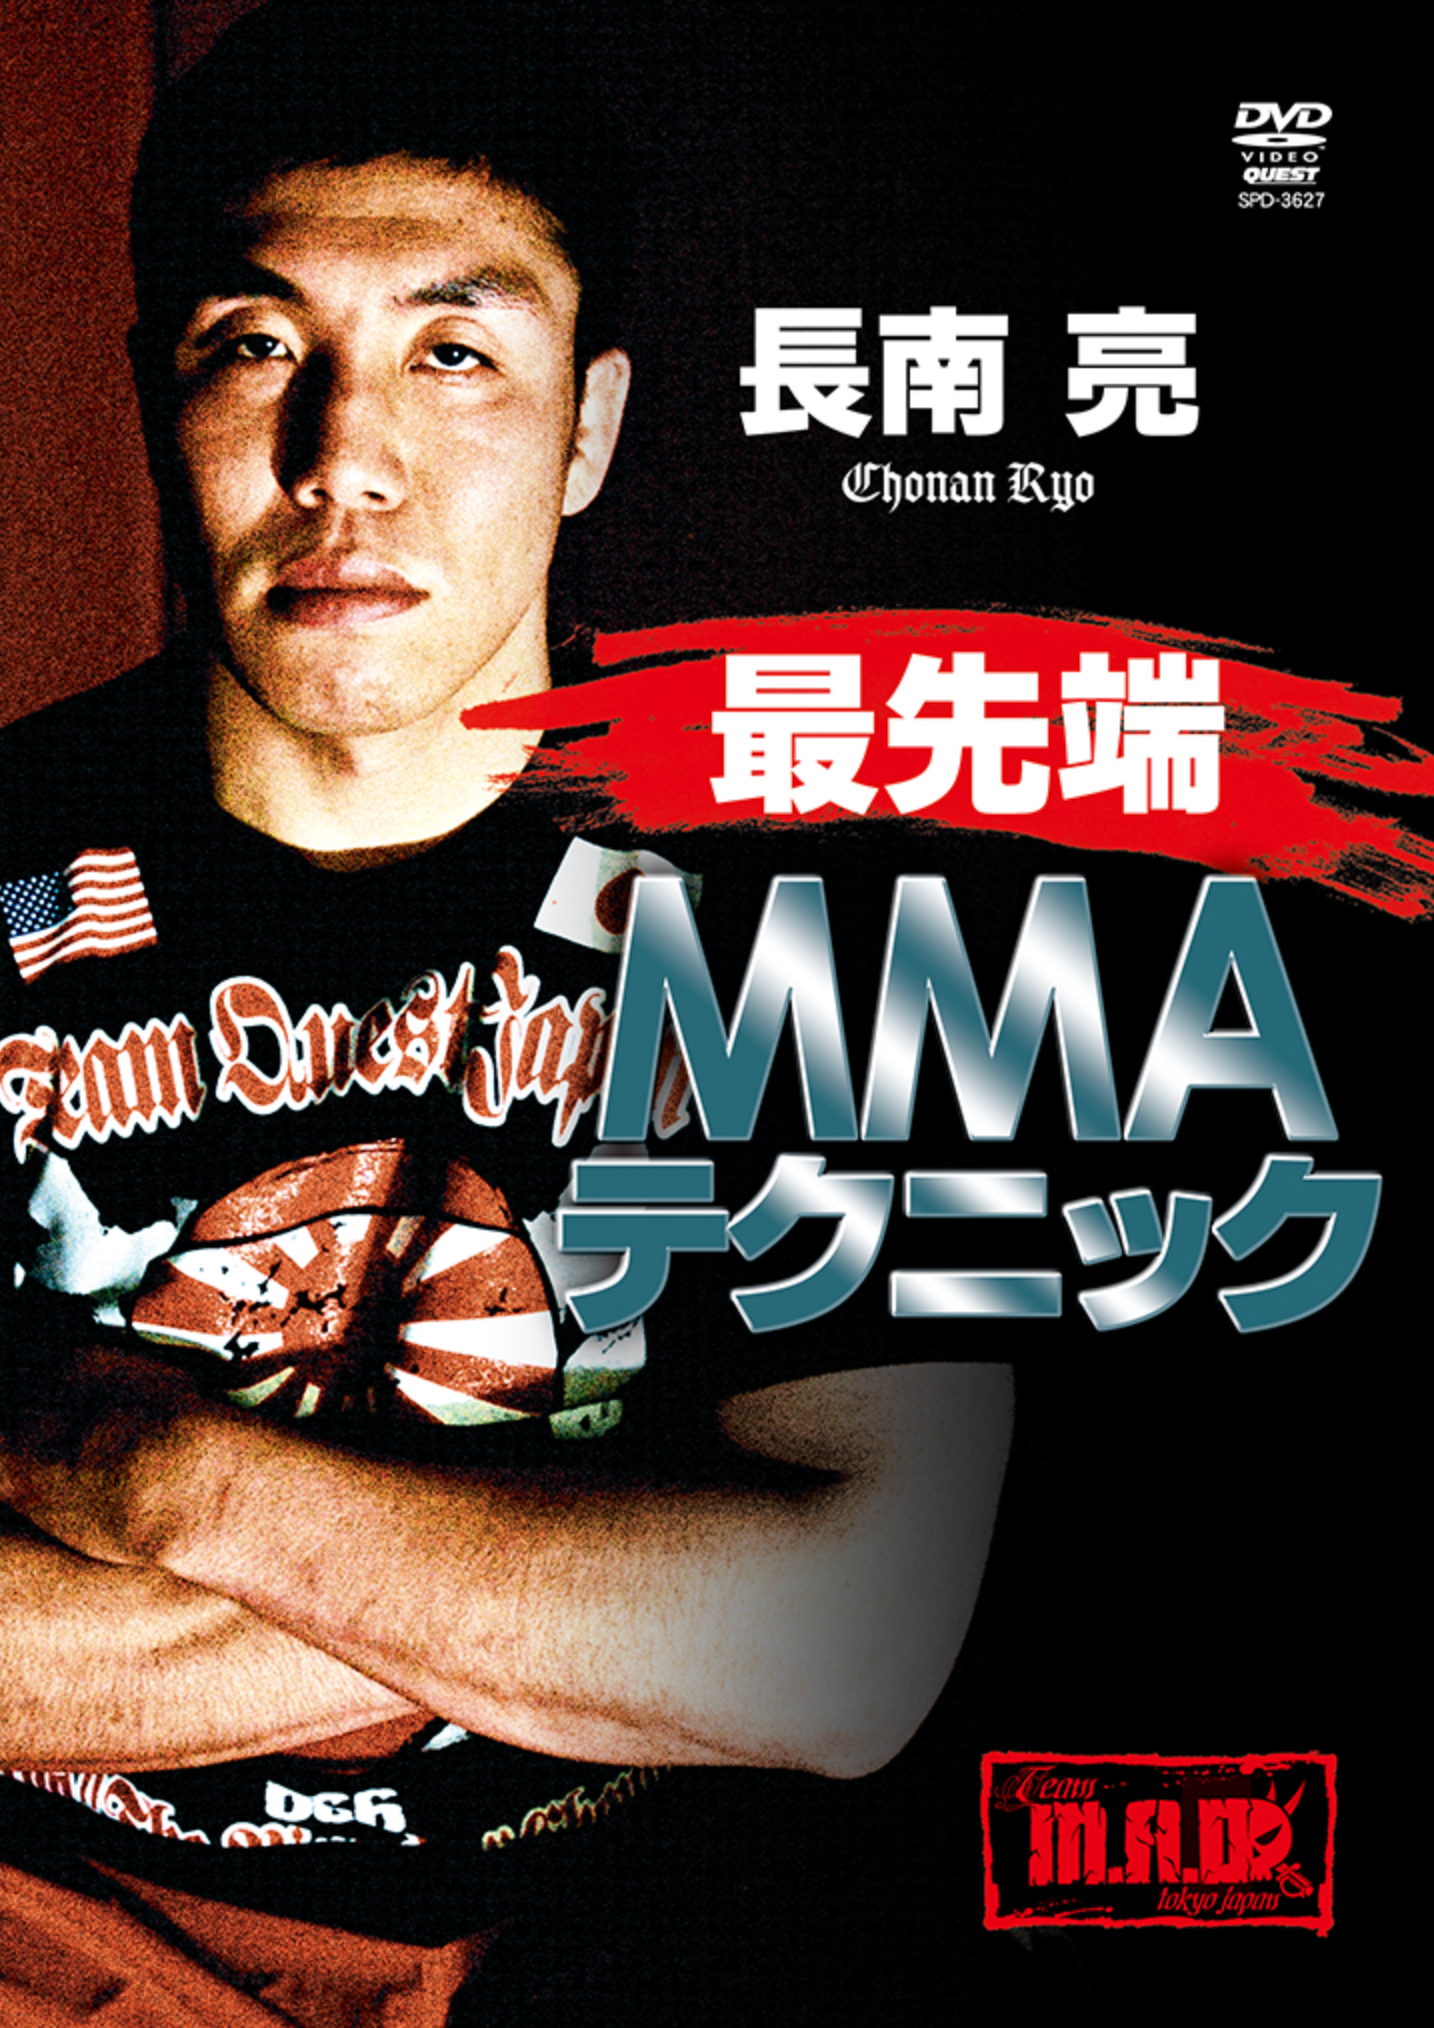 MMA Techniques Level 1 DVD with Ryo Chonan - Budovideos Inc